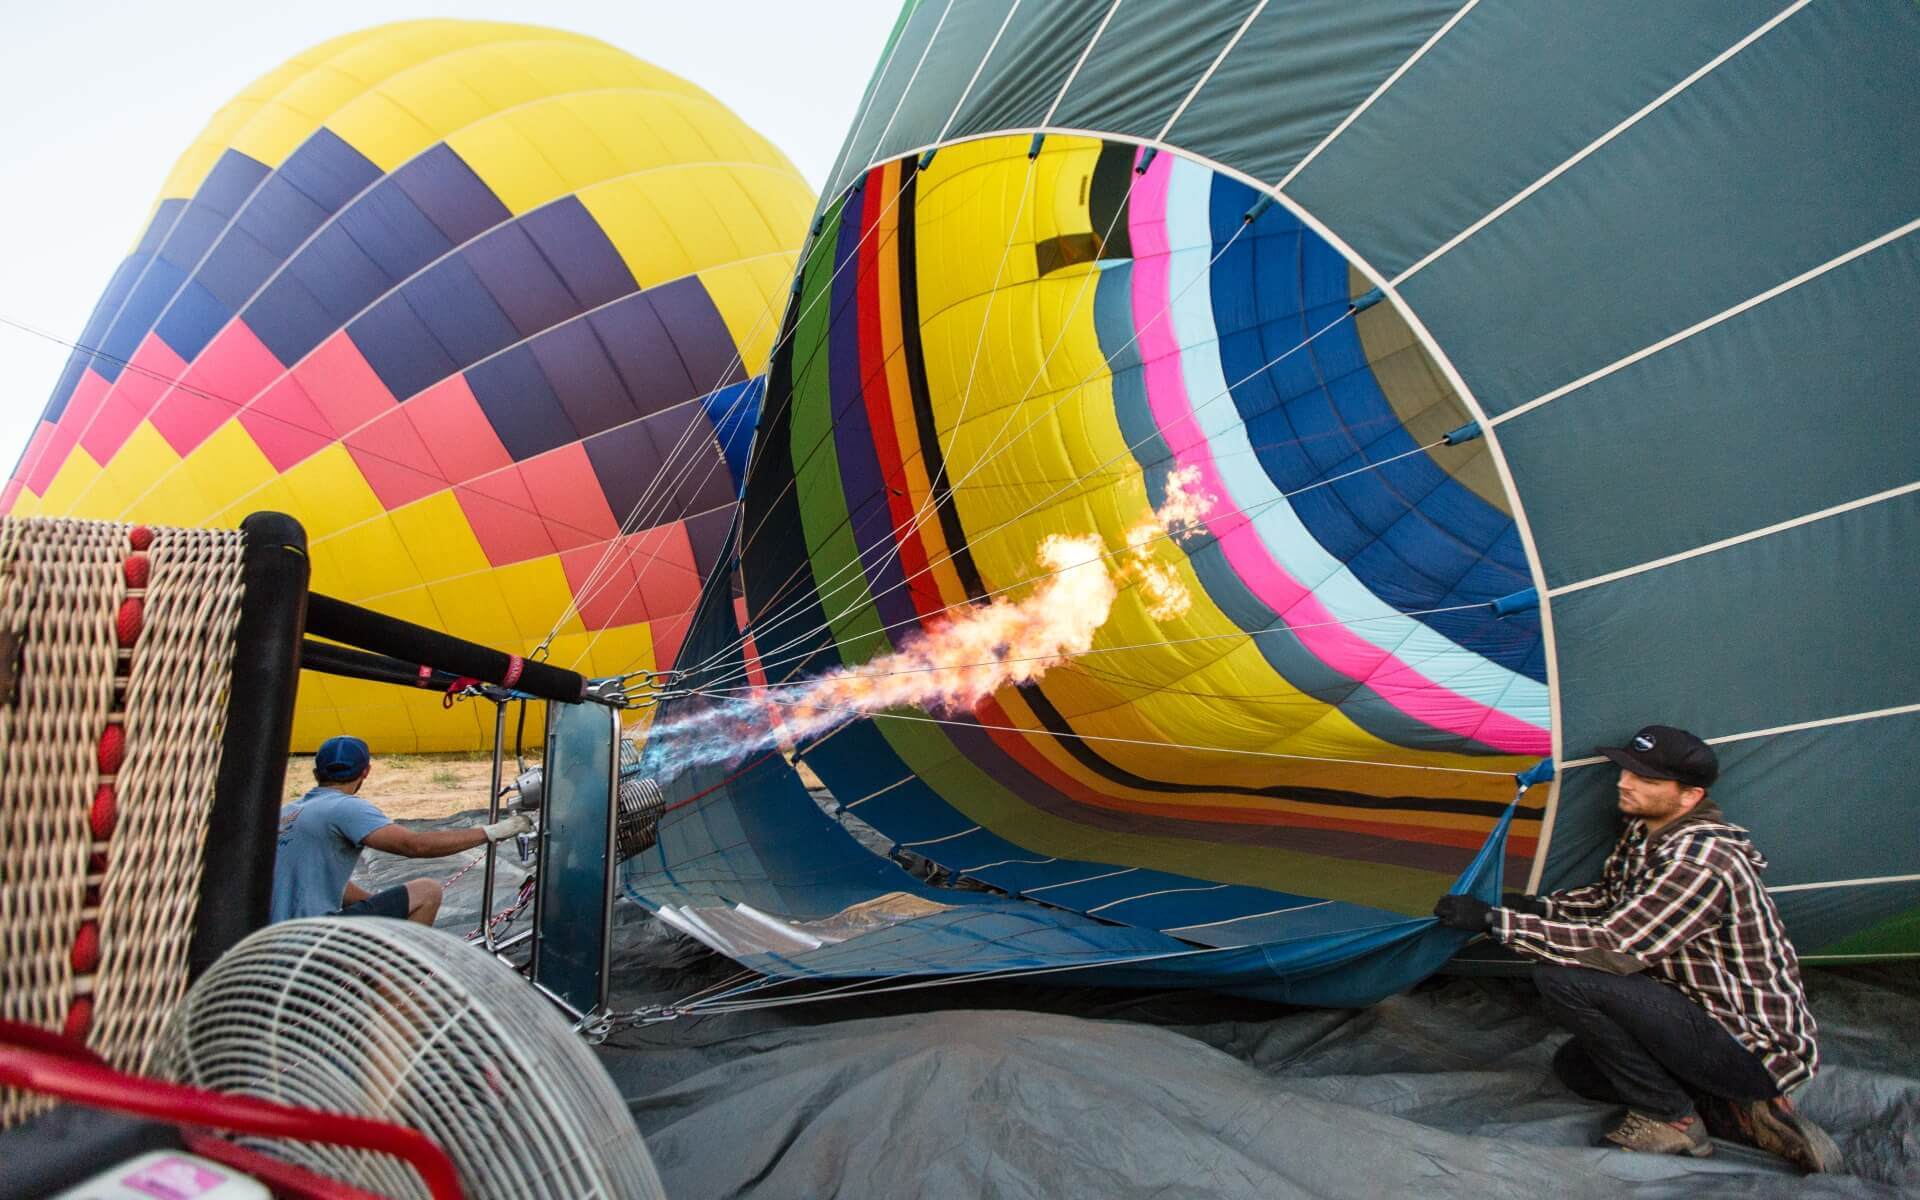 California Dreamin' Hot Air Balloon Rides over Temecula Wine Country